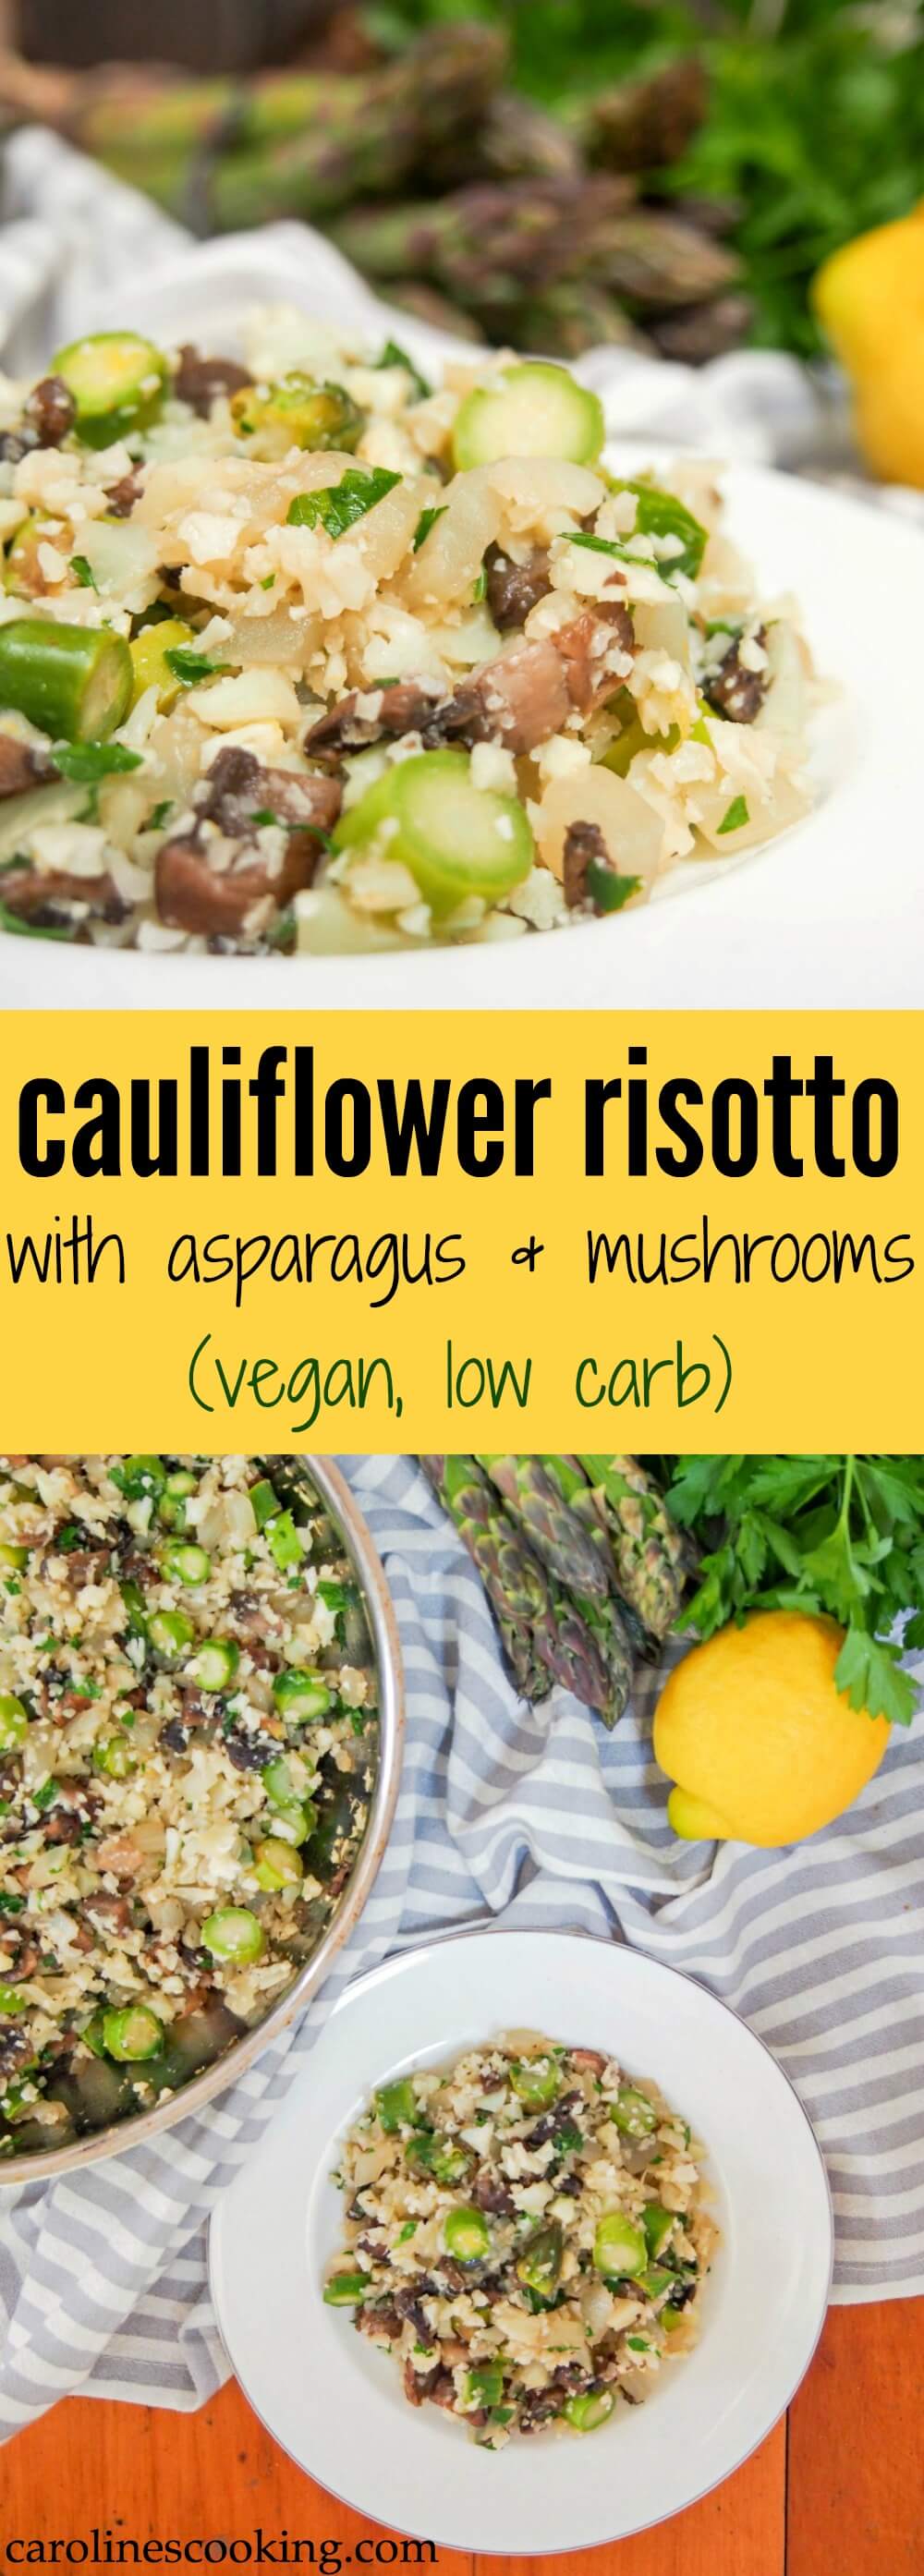 cauliflower risotto pin Recipe vegetarian dish with asparagus mushrooms cauliflower rice